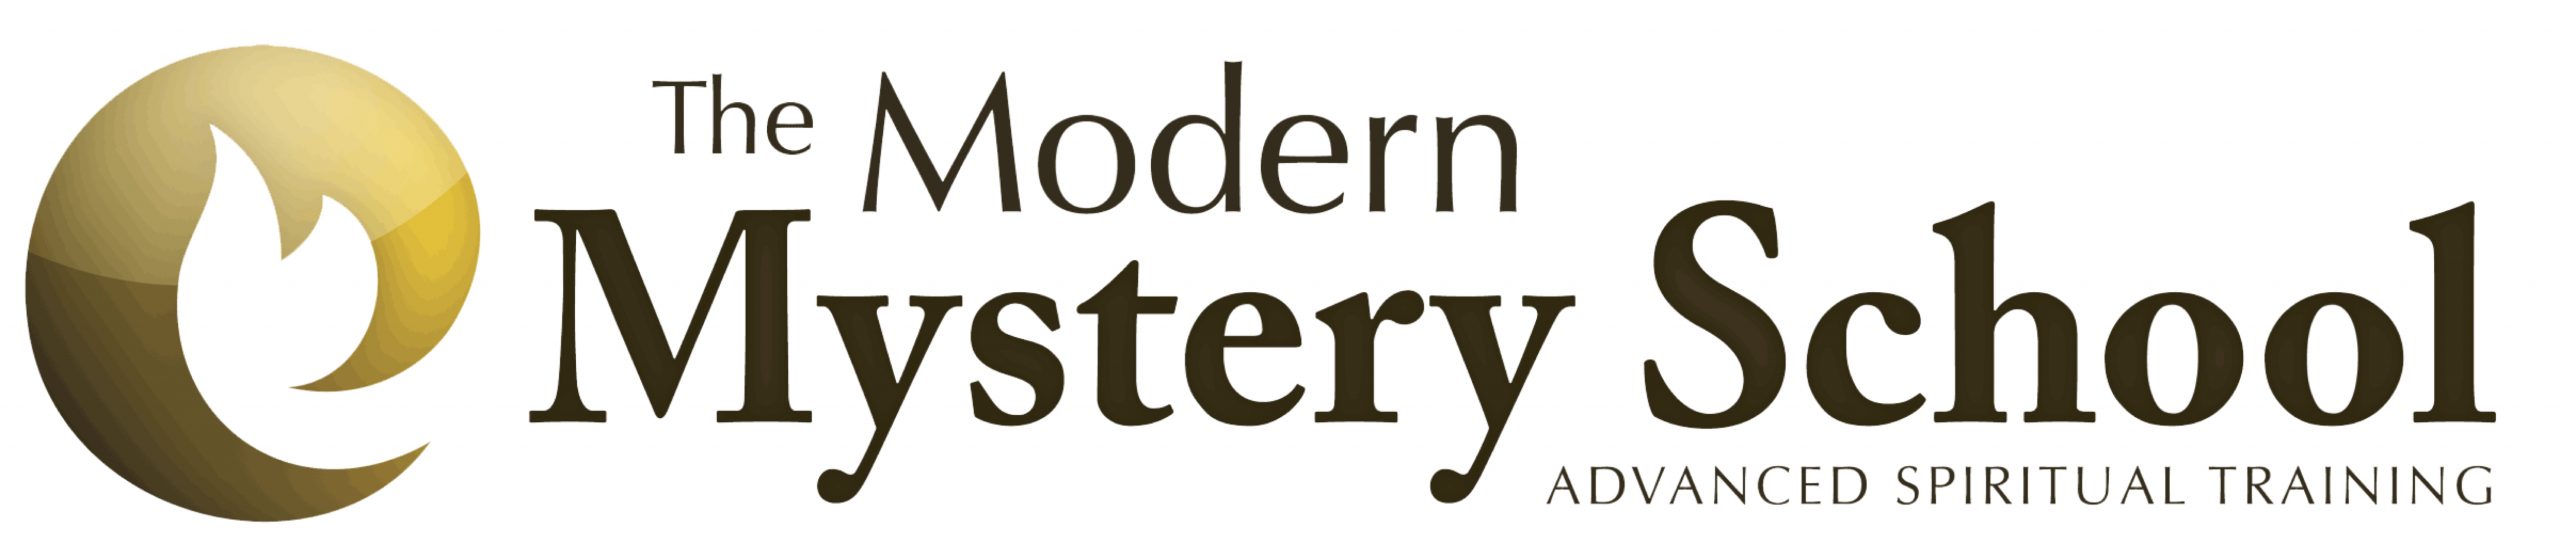 The Modern Mystery School